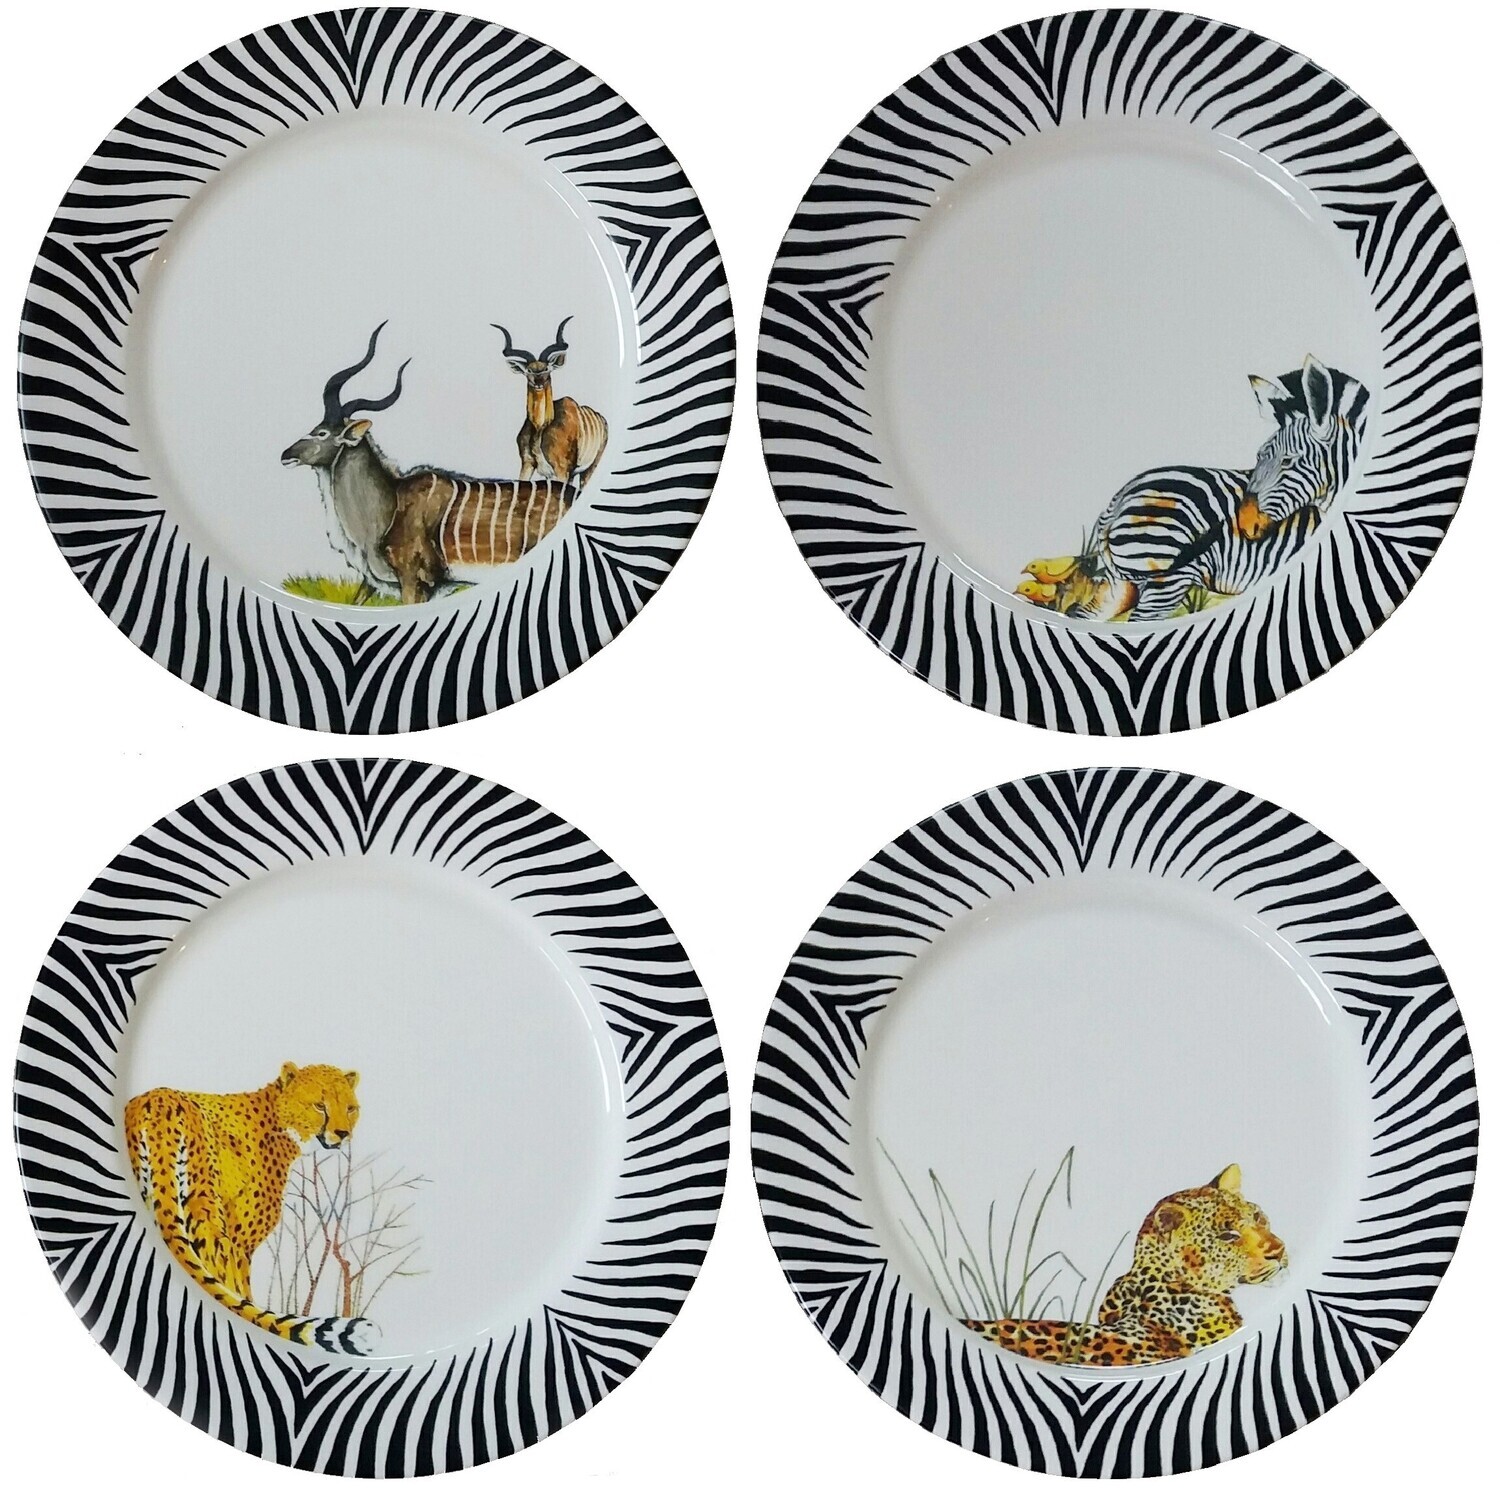 Set of 4 Charger Plates
Kudu,Zebra,Cheetah,Leopard
FREE SHIPPING